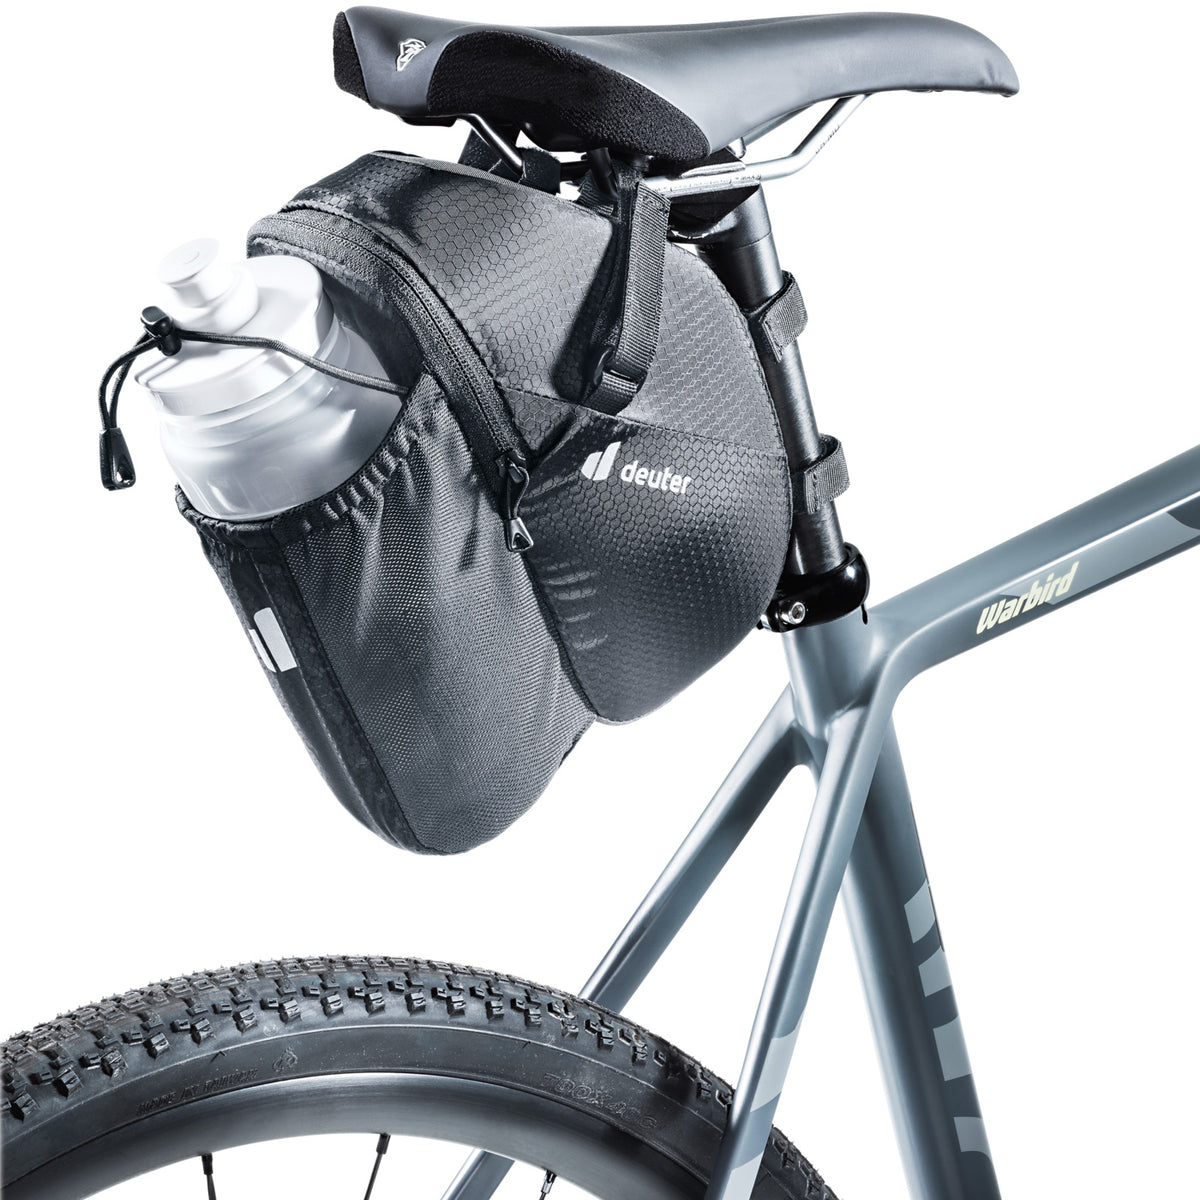 Deuter Bike Bag Saddlebag - Black | All4cycling